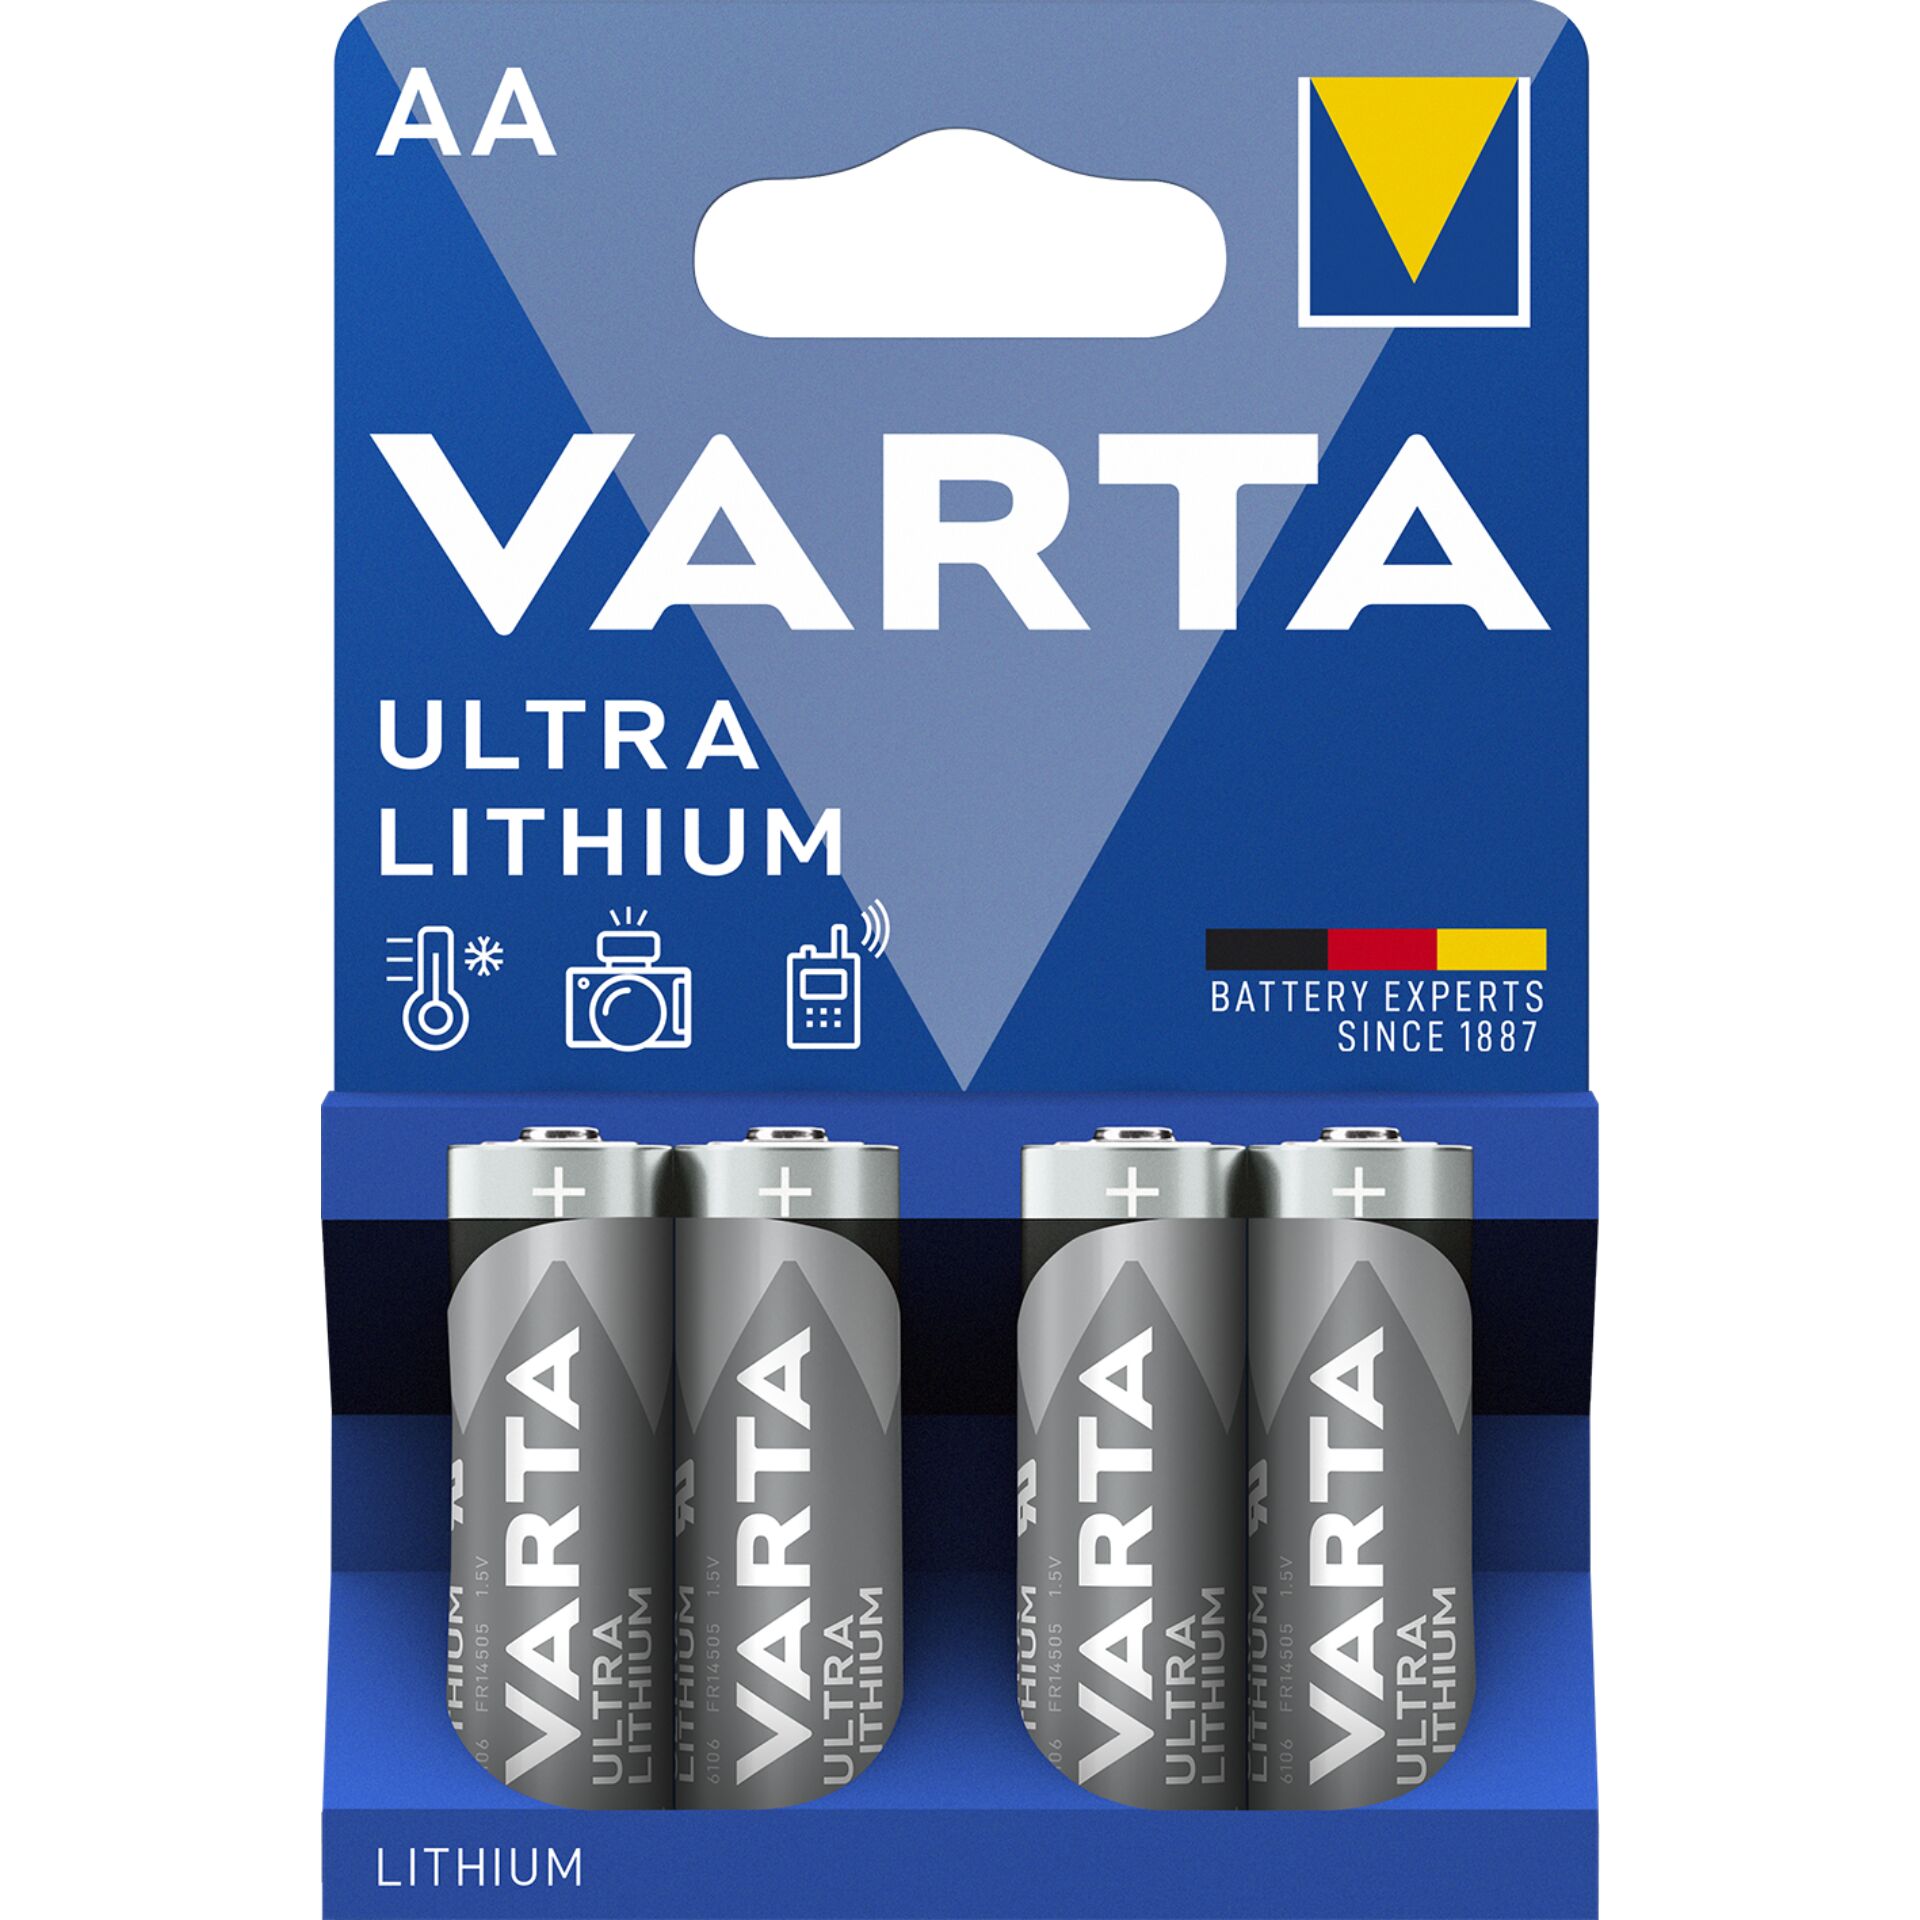 Varta 4x AA Lithium Einwegbatterie